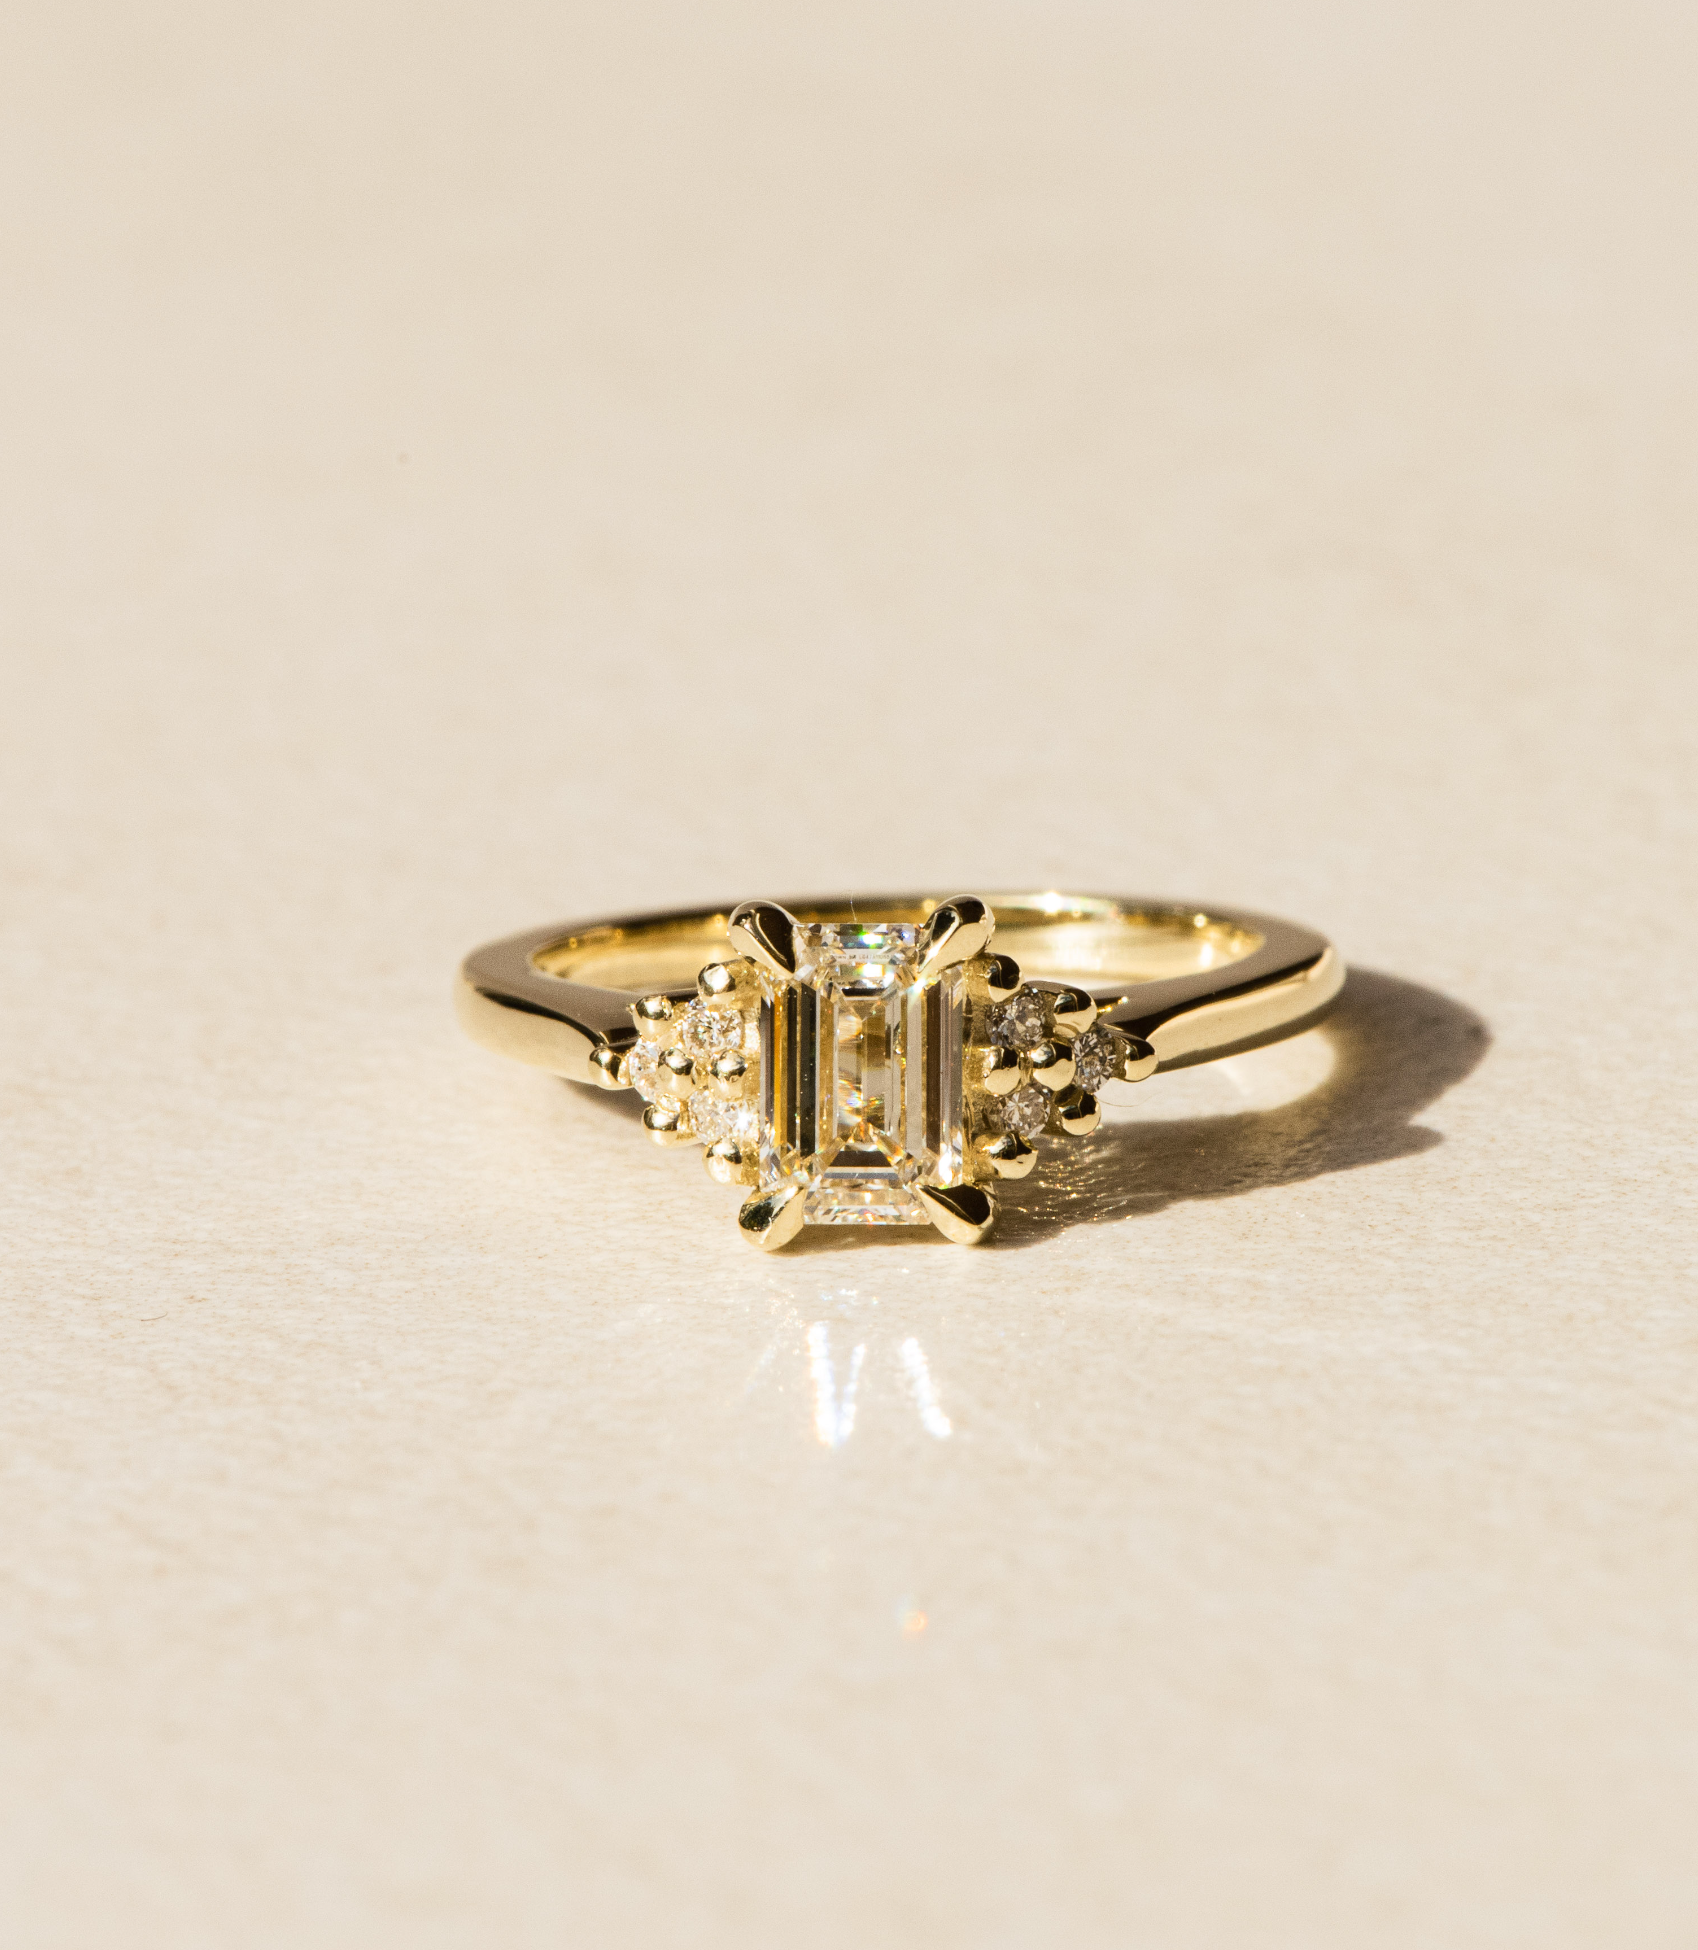 Dean & Dust - Bespoke Design - Emerald Diamond Engagement Ring with Round Diamond Side Stones